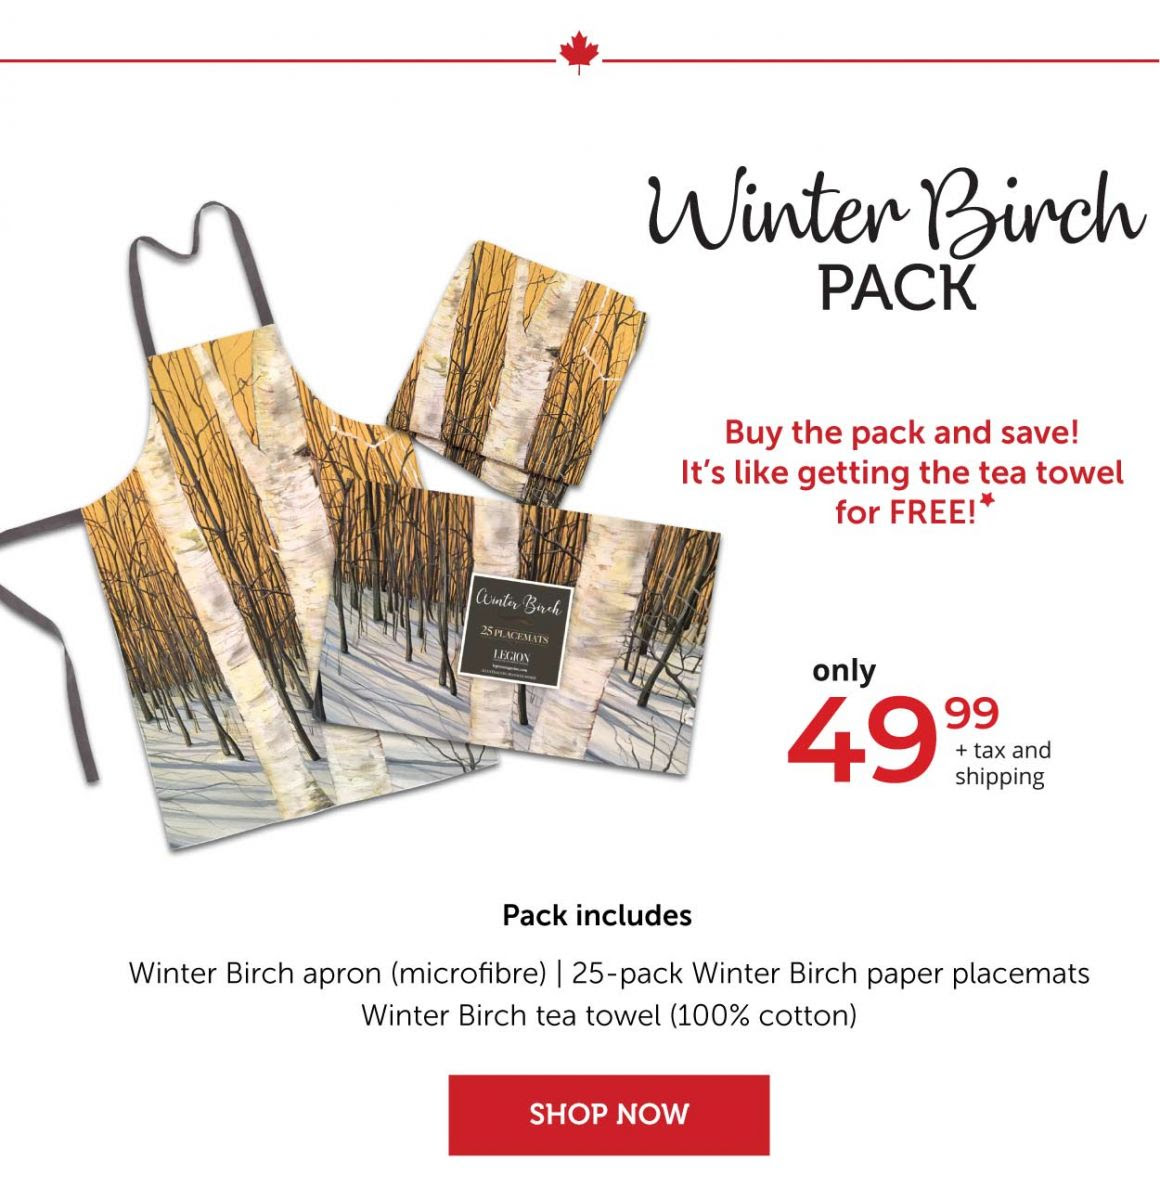 Winter Birch Pack